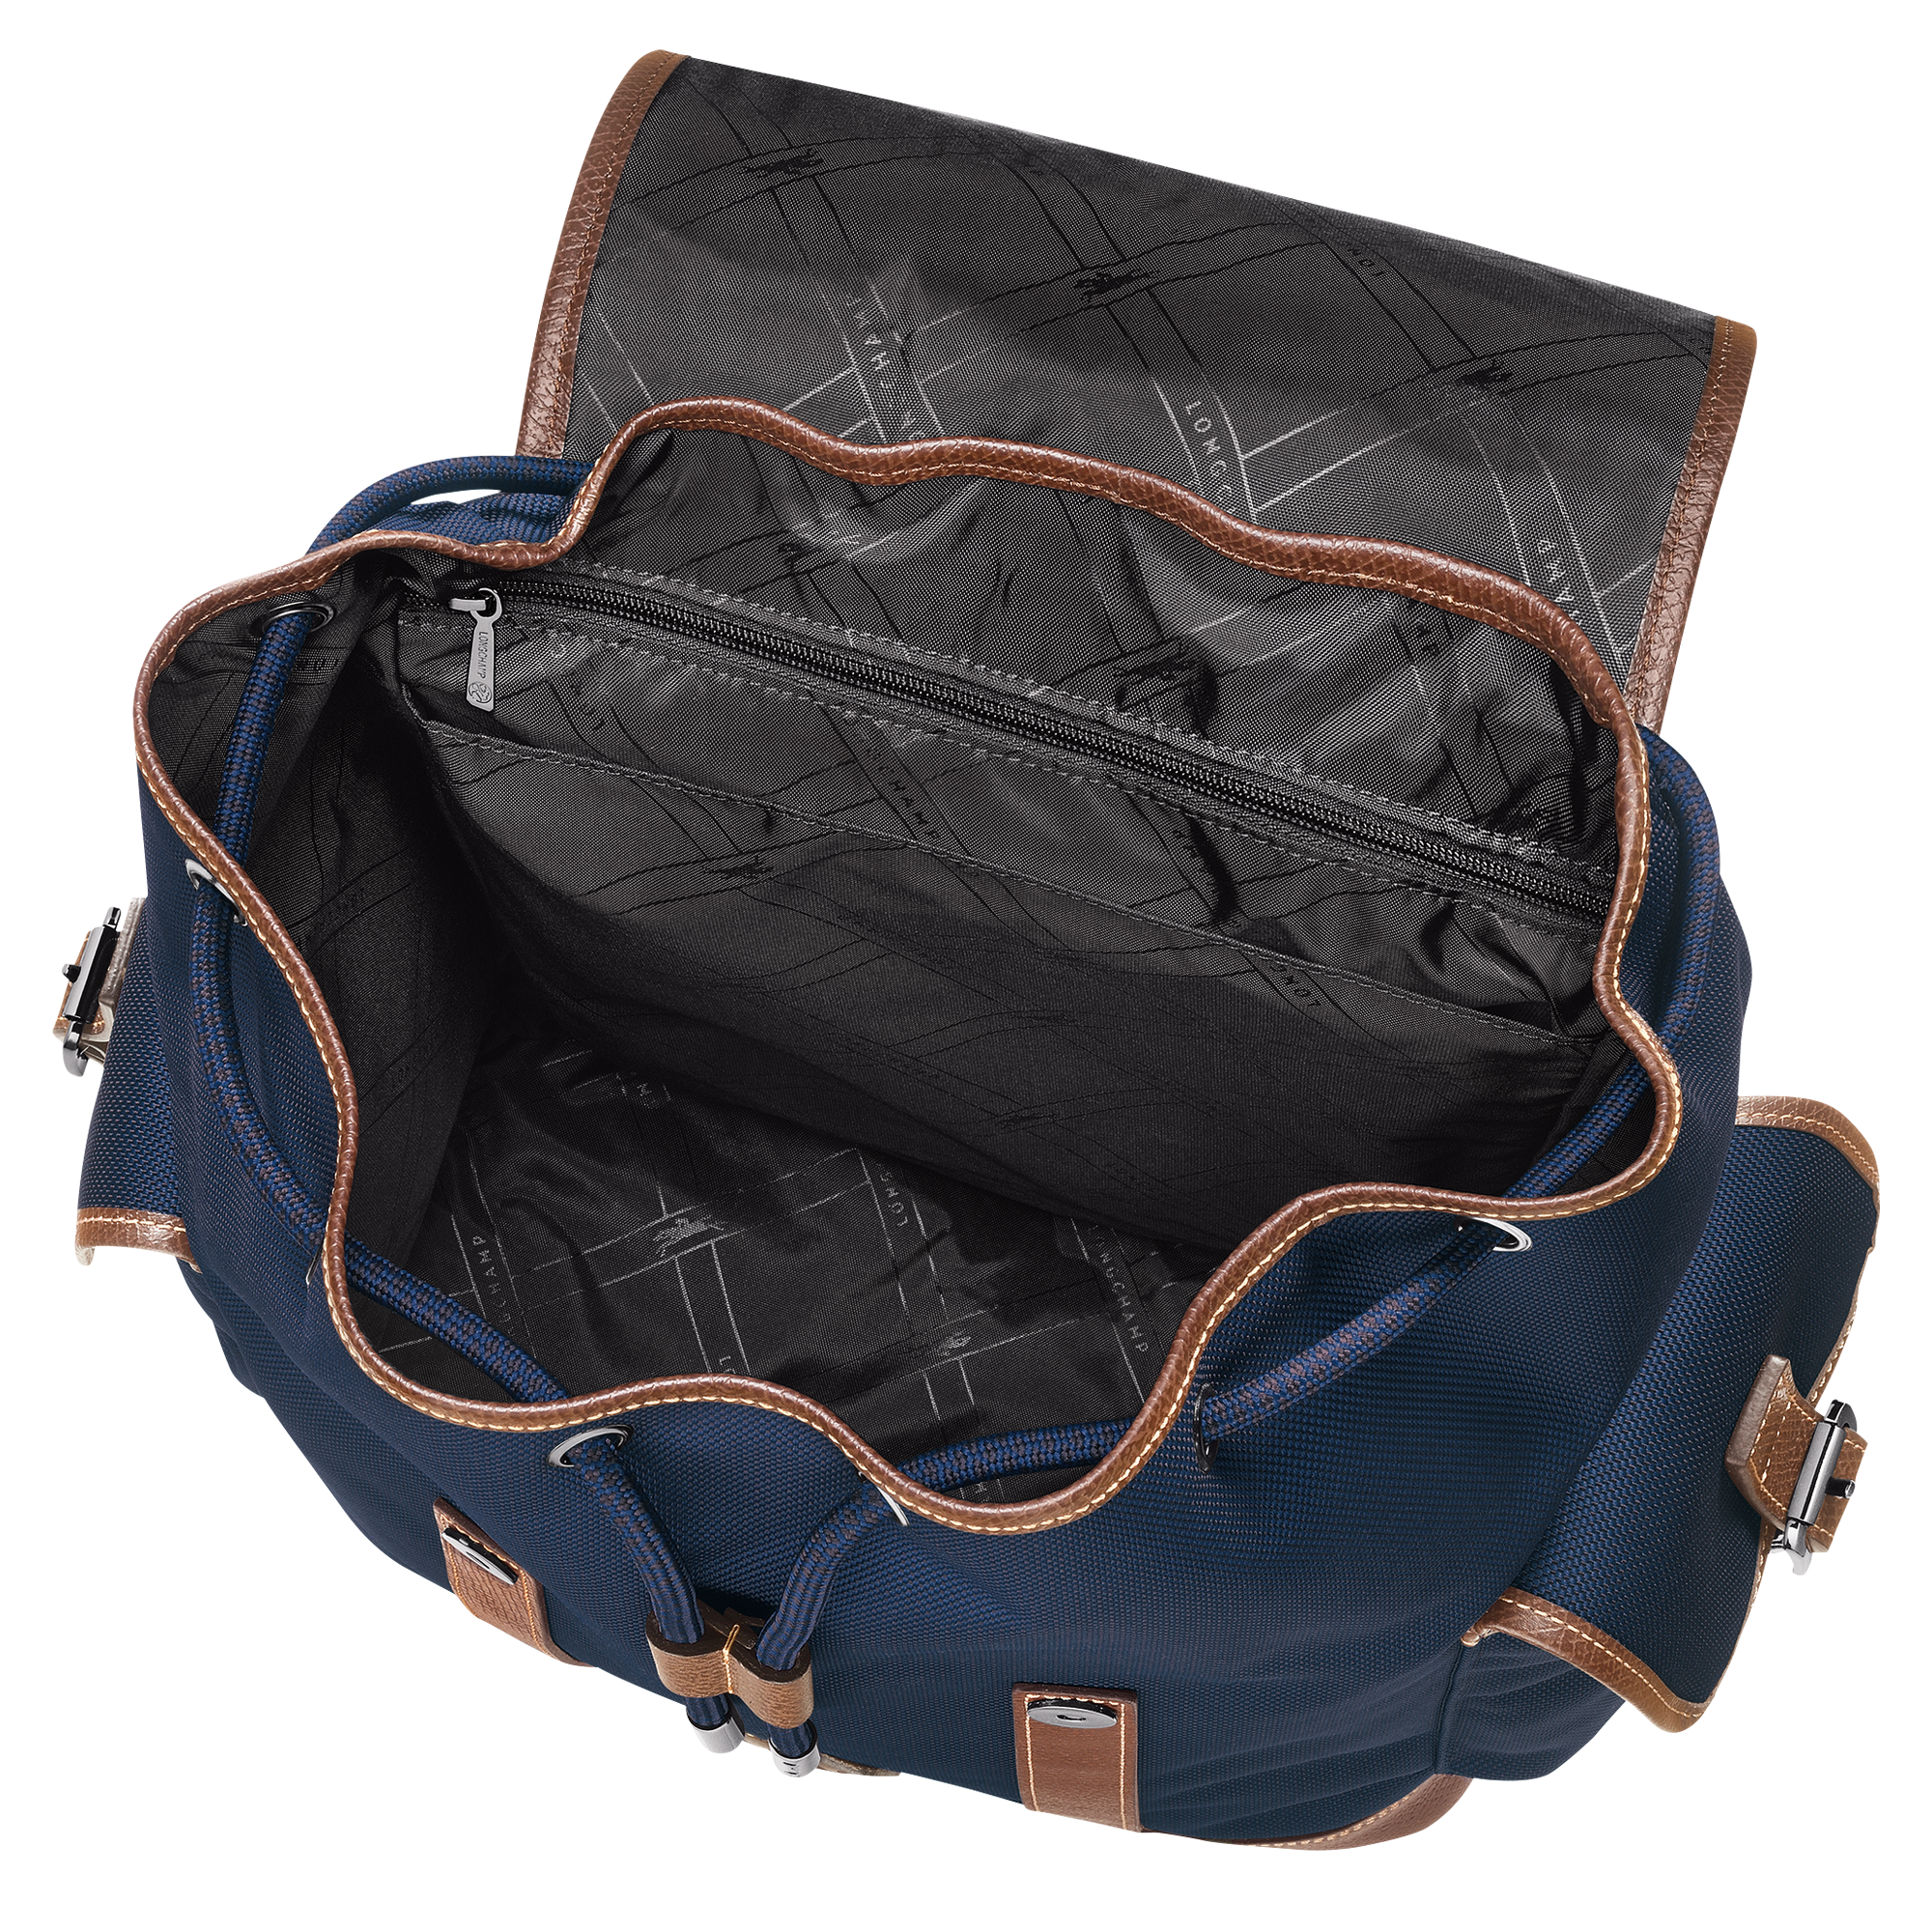 Boxford Backpack, Blue